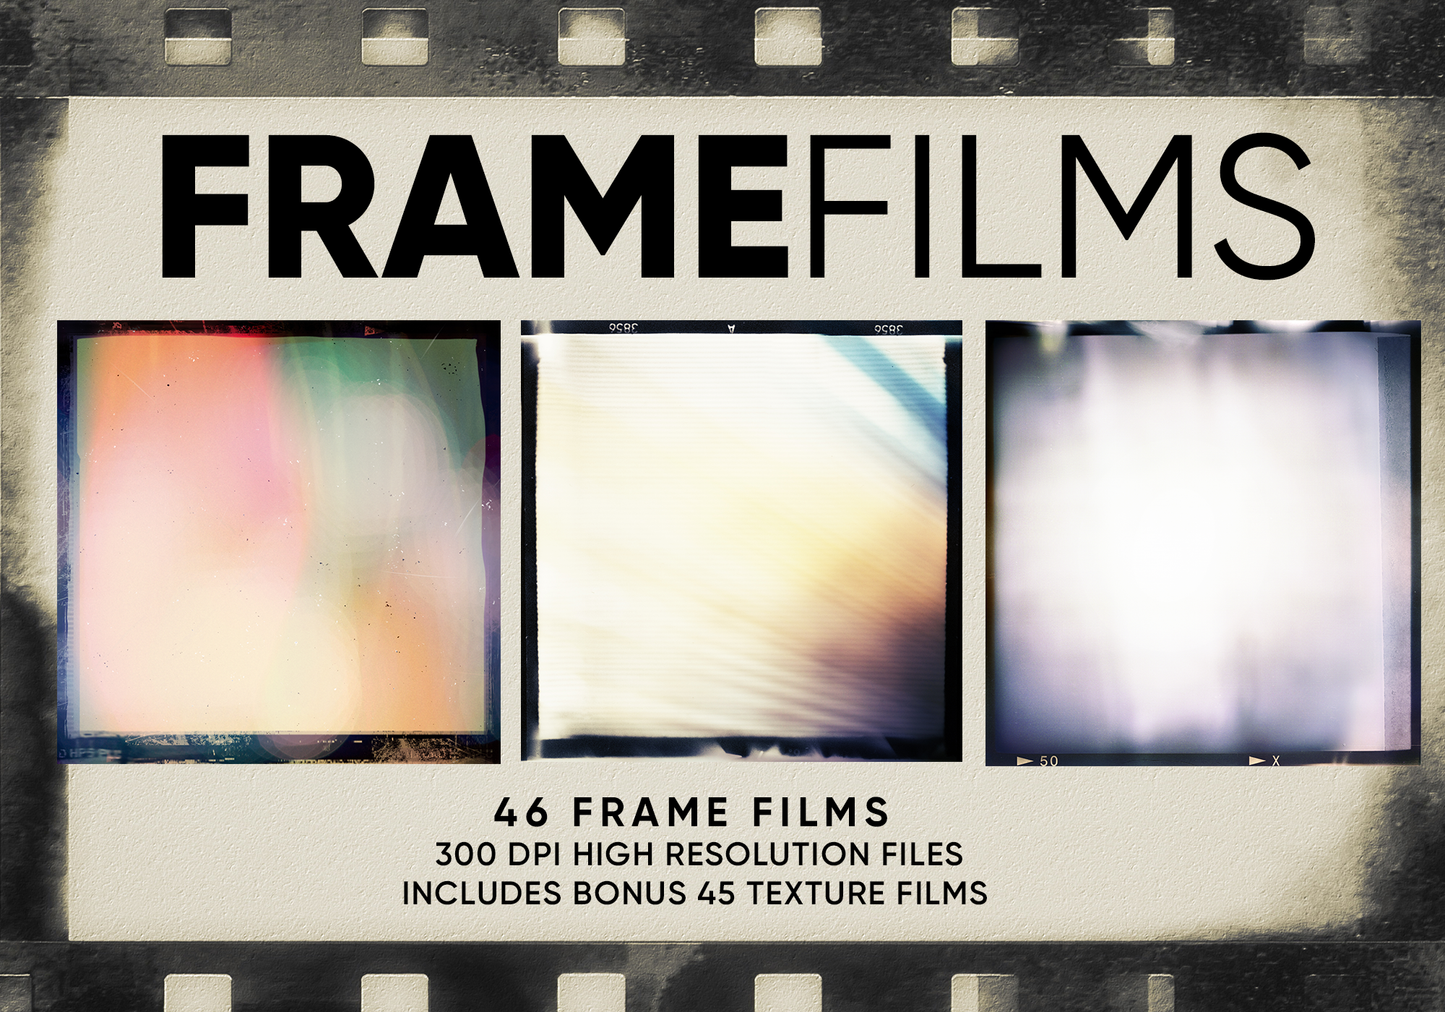 Frame Films